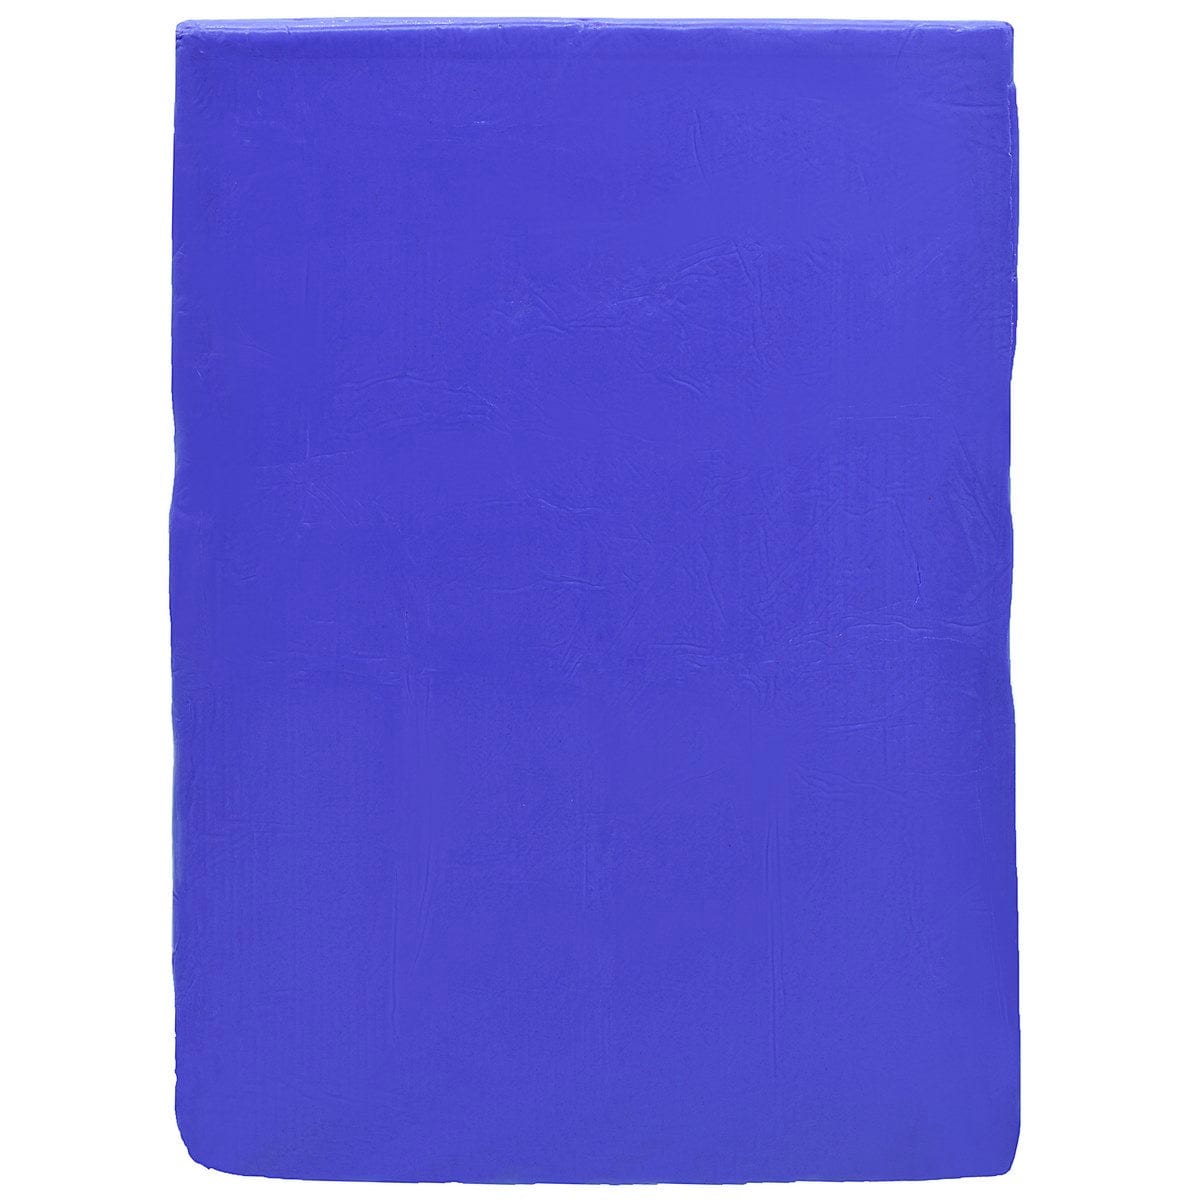 jags-mumbai Clay Polymer Clay 250gm Purple PCLAY-PE